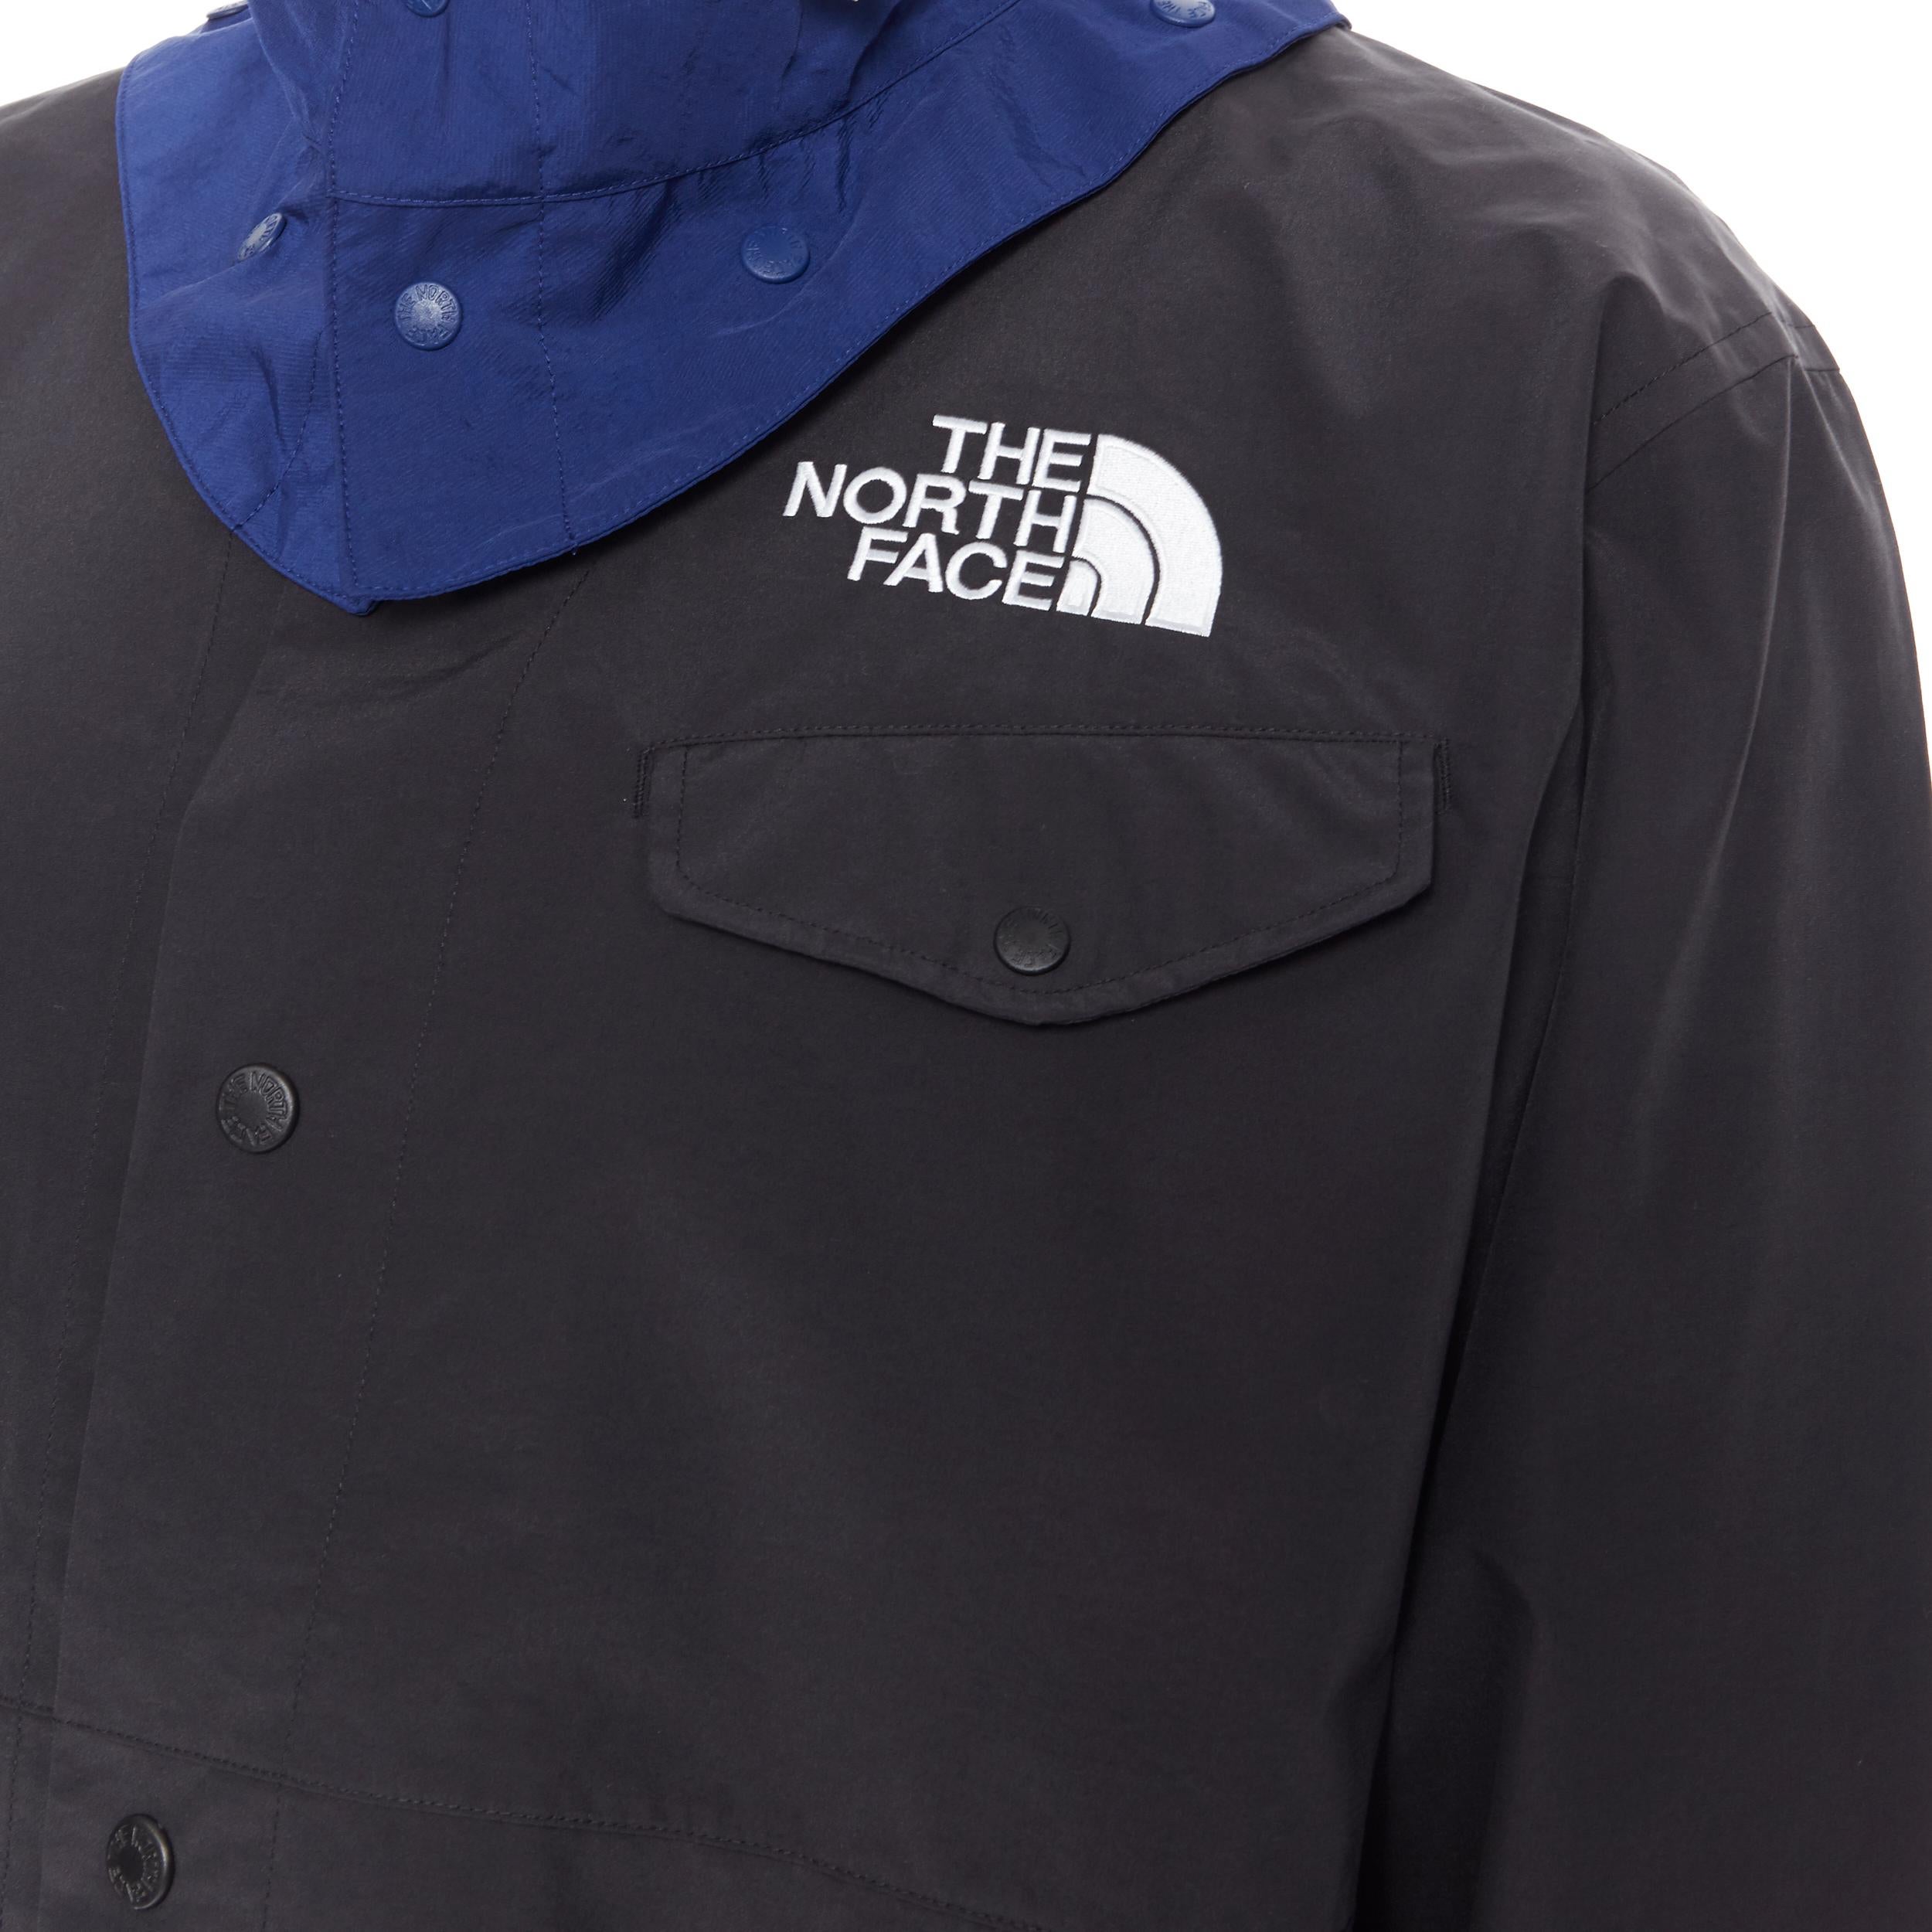 new THE NORTH FACE KAZUKI KURAISHI Black Series Charlie Duty Jacket Black Blue S For Sale 3